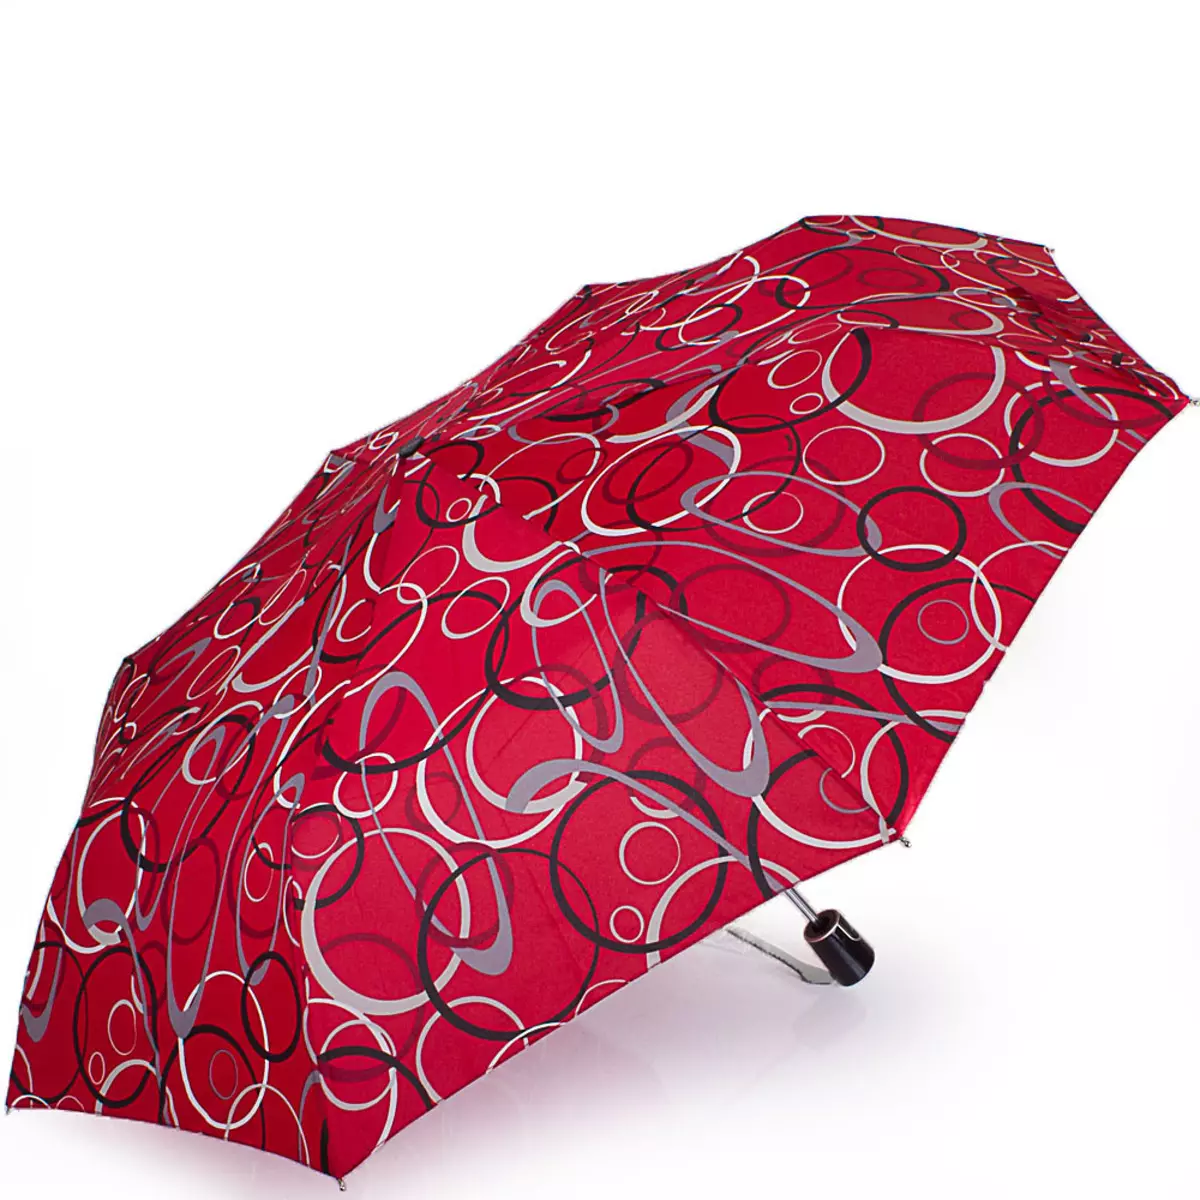 Doppler Umbrellas (60 ফটো): মহিলা মডেল বেত এবং ভাঁজ, doppler রিভিউ 15227_22